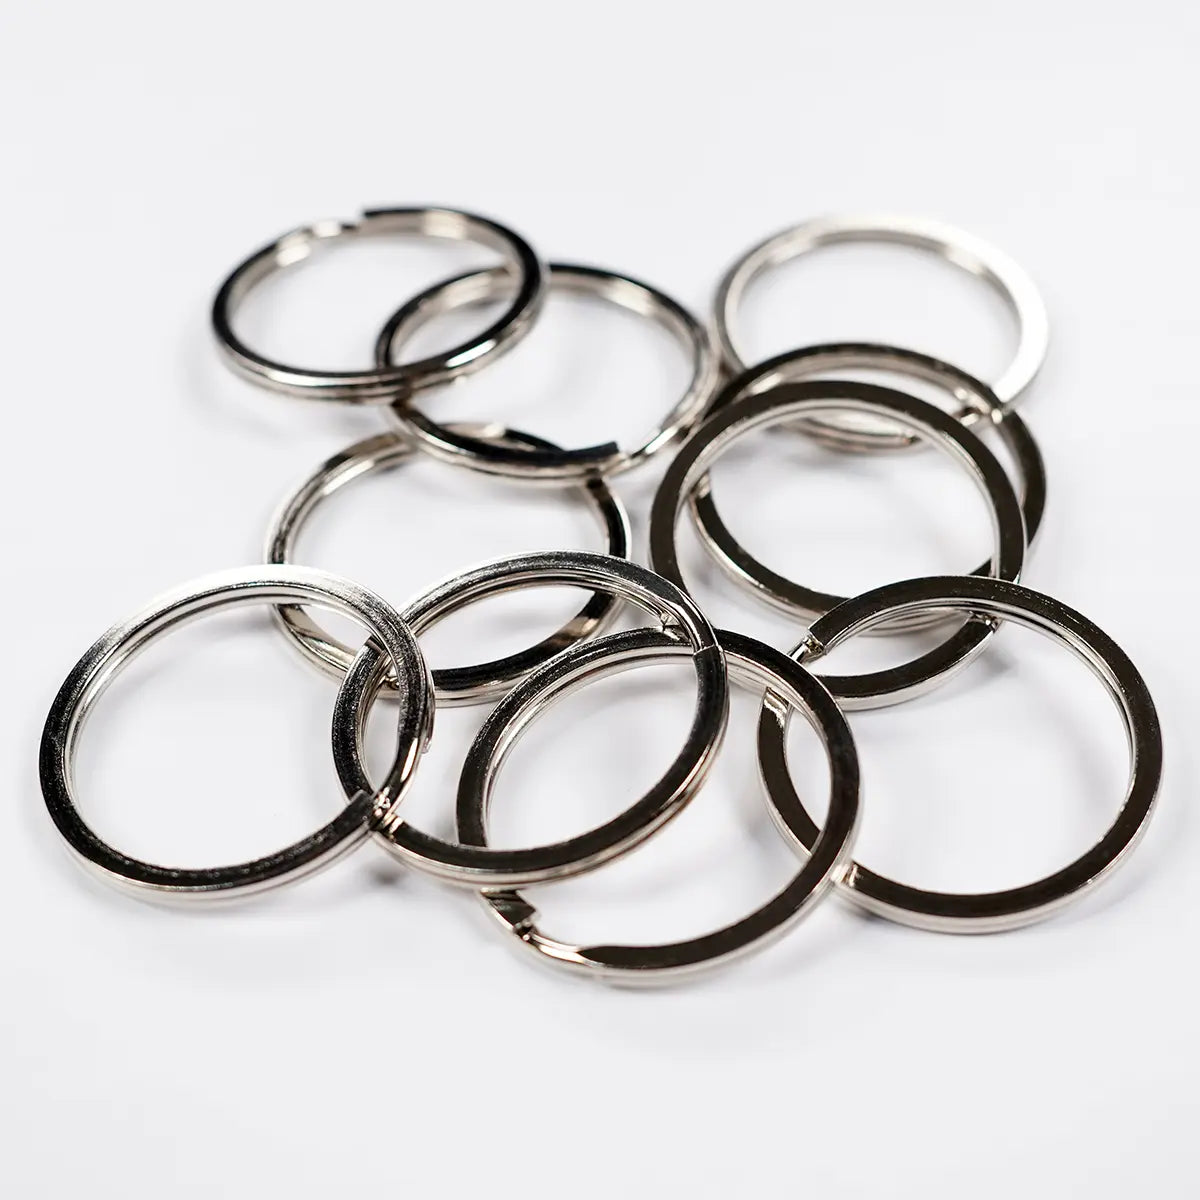 Millennial Essentials 30pcs Flat Key Rings Key Chain Metal Split Ring (Round 1.25 inch Diameter), for Home Car Keys Organization, Lead Free Nickel